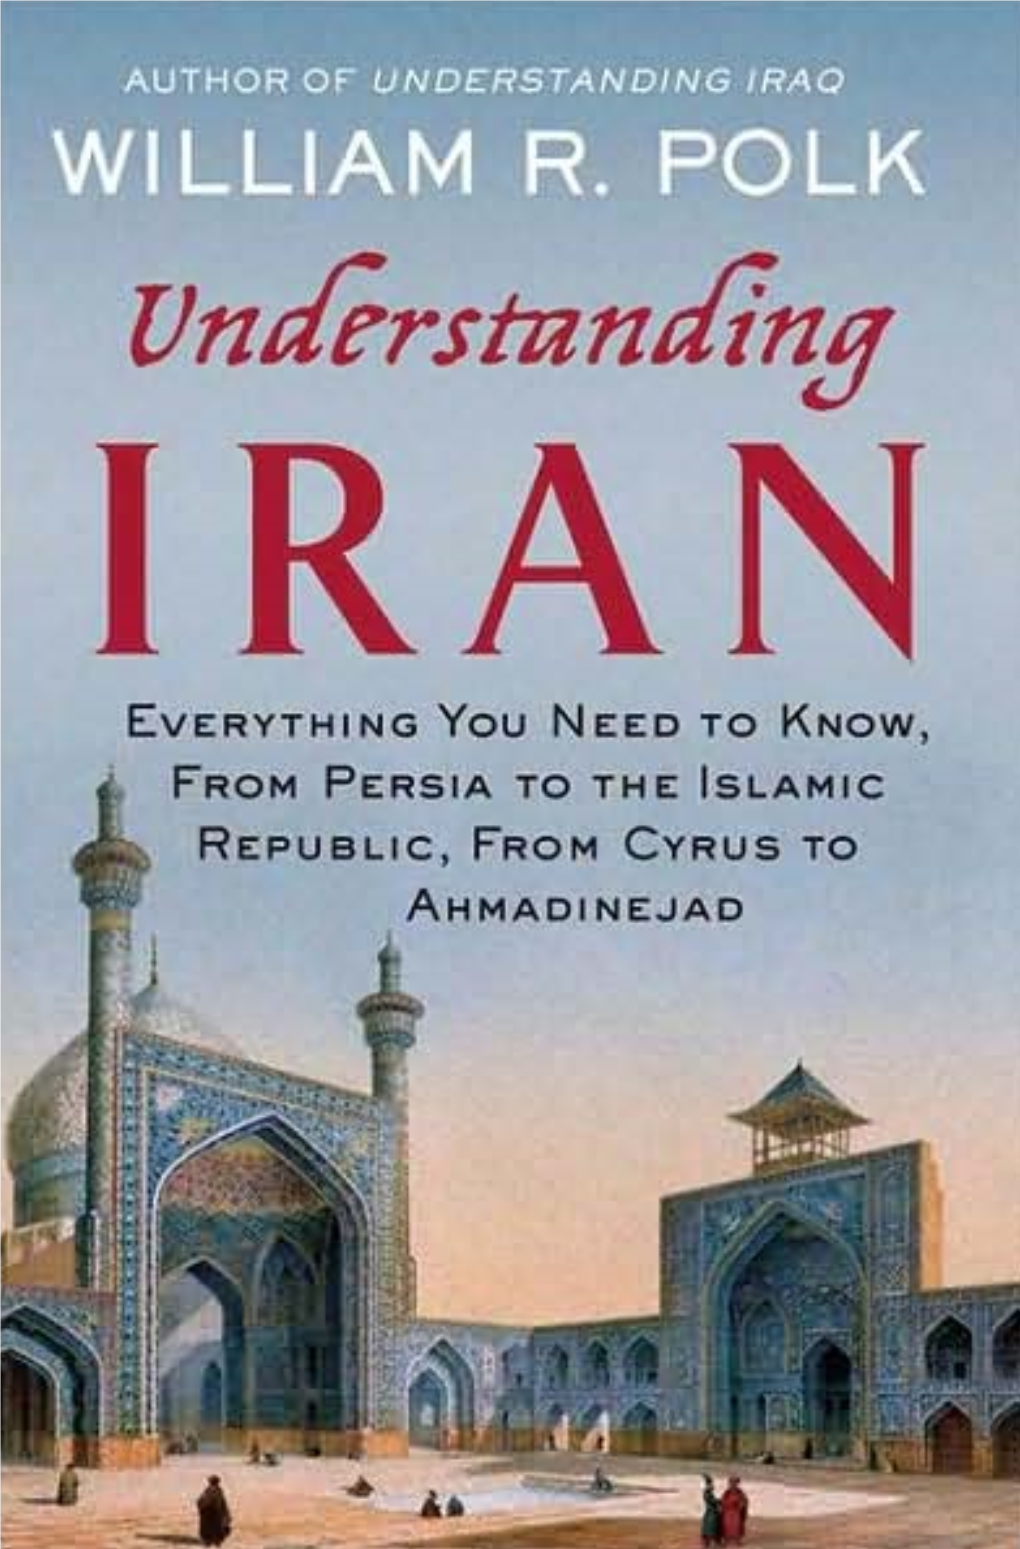 Understanding Iran 9/9/09 12:24 PM Page I